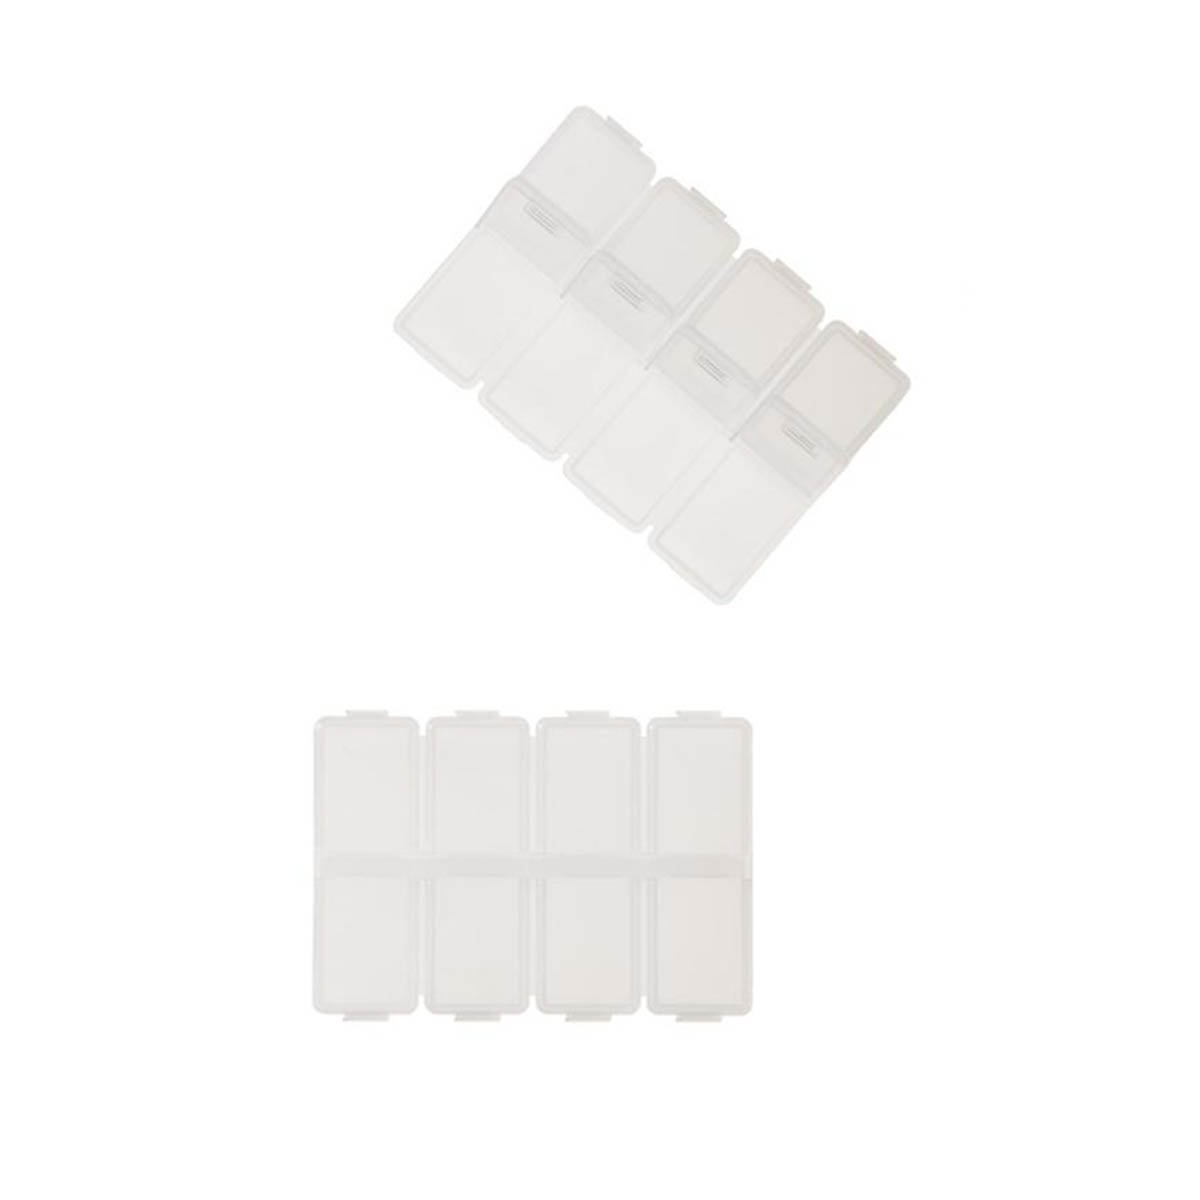 Japanese Plastic Supplement Case 8 Division Storage Box